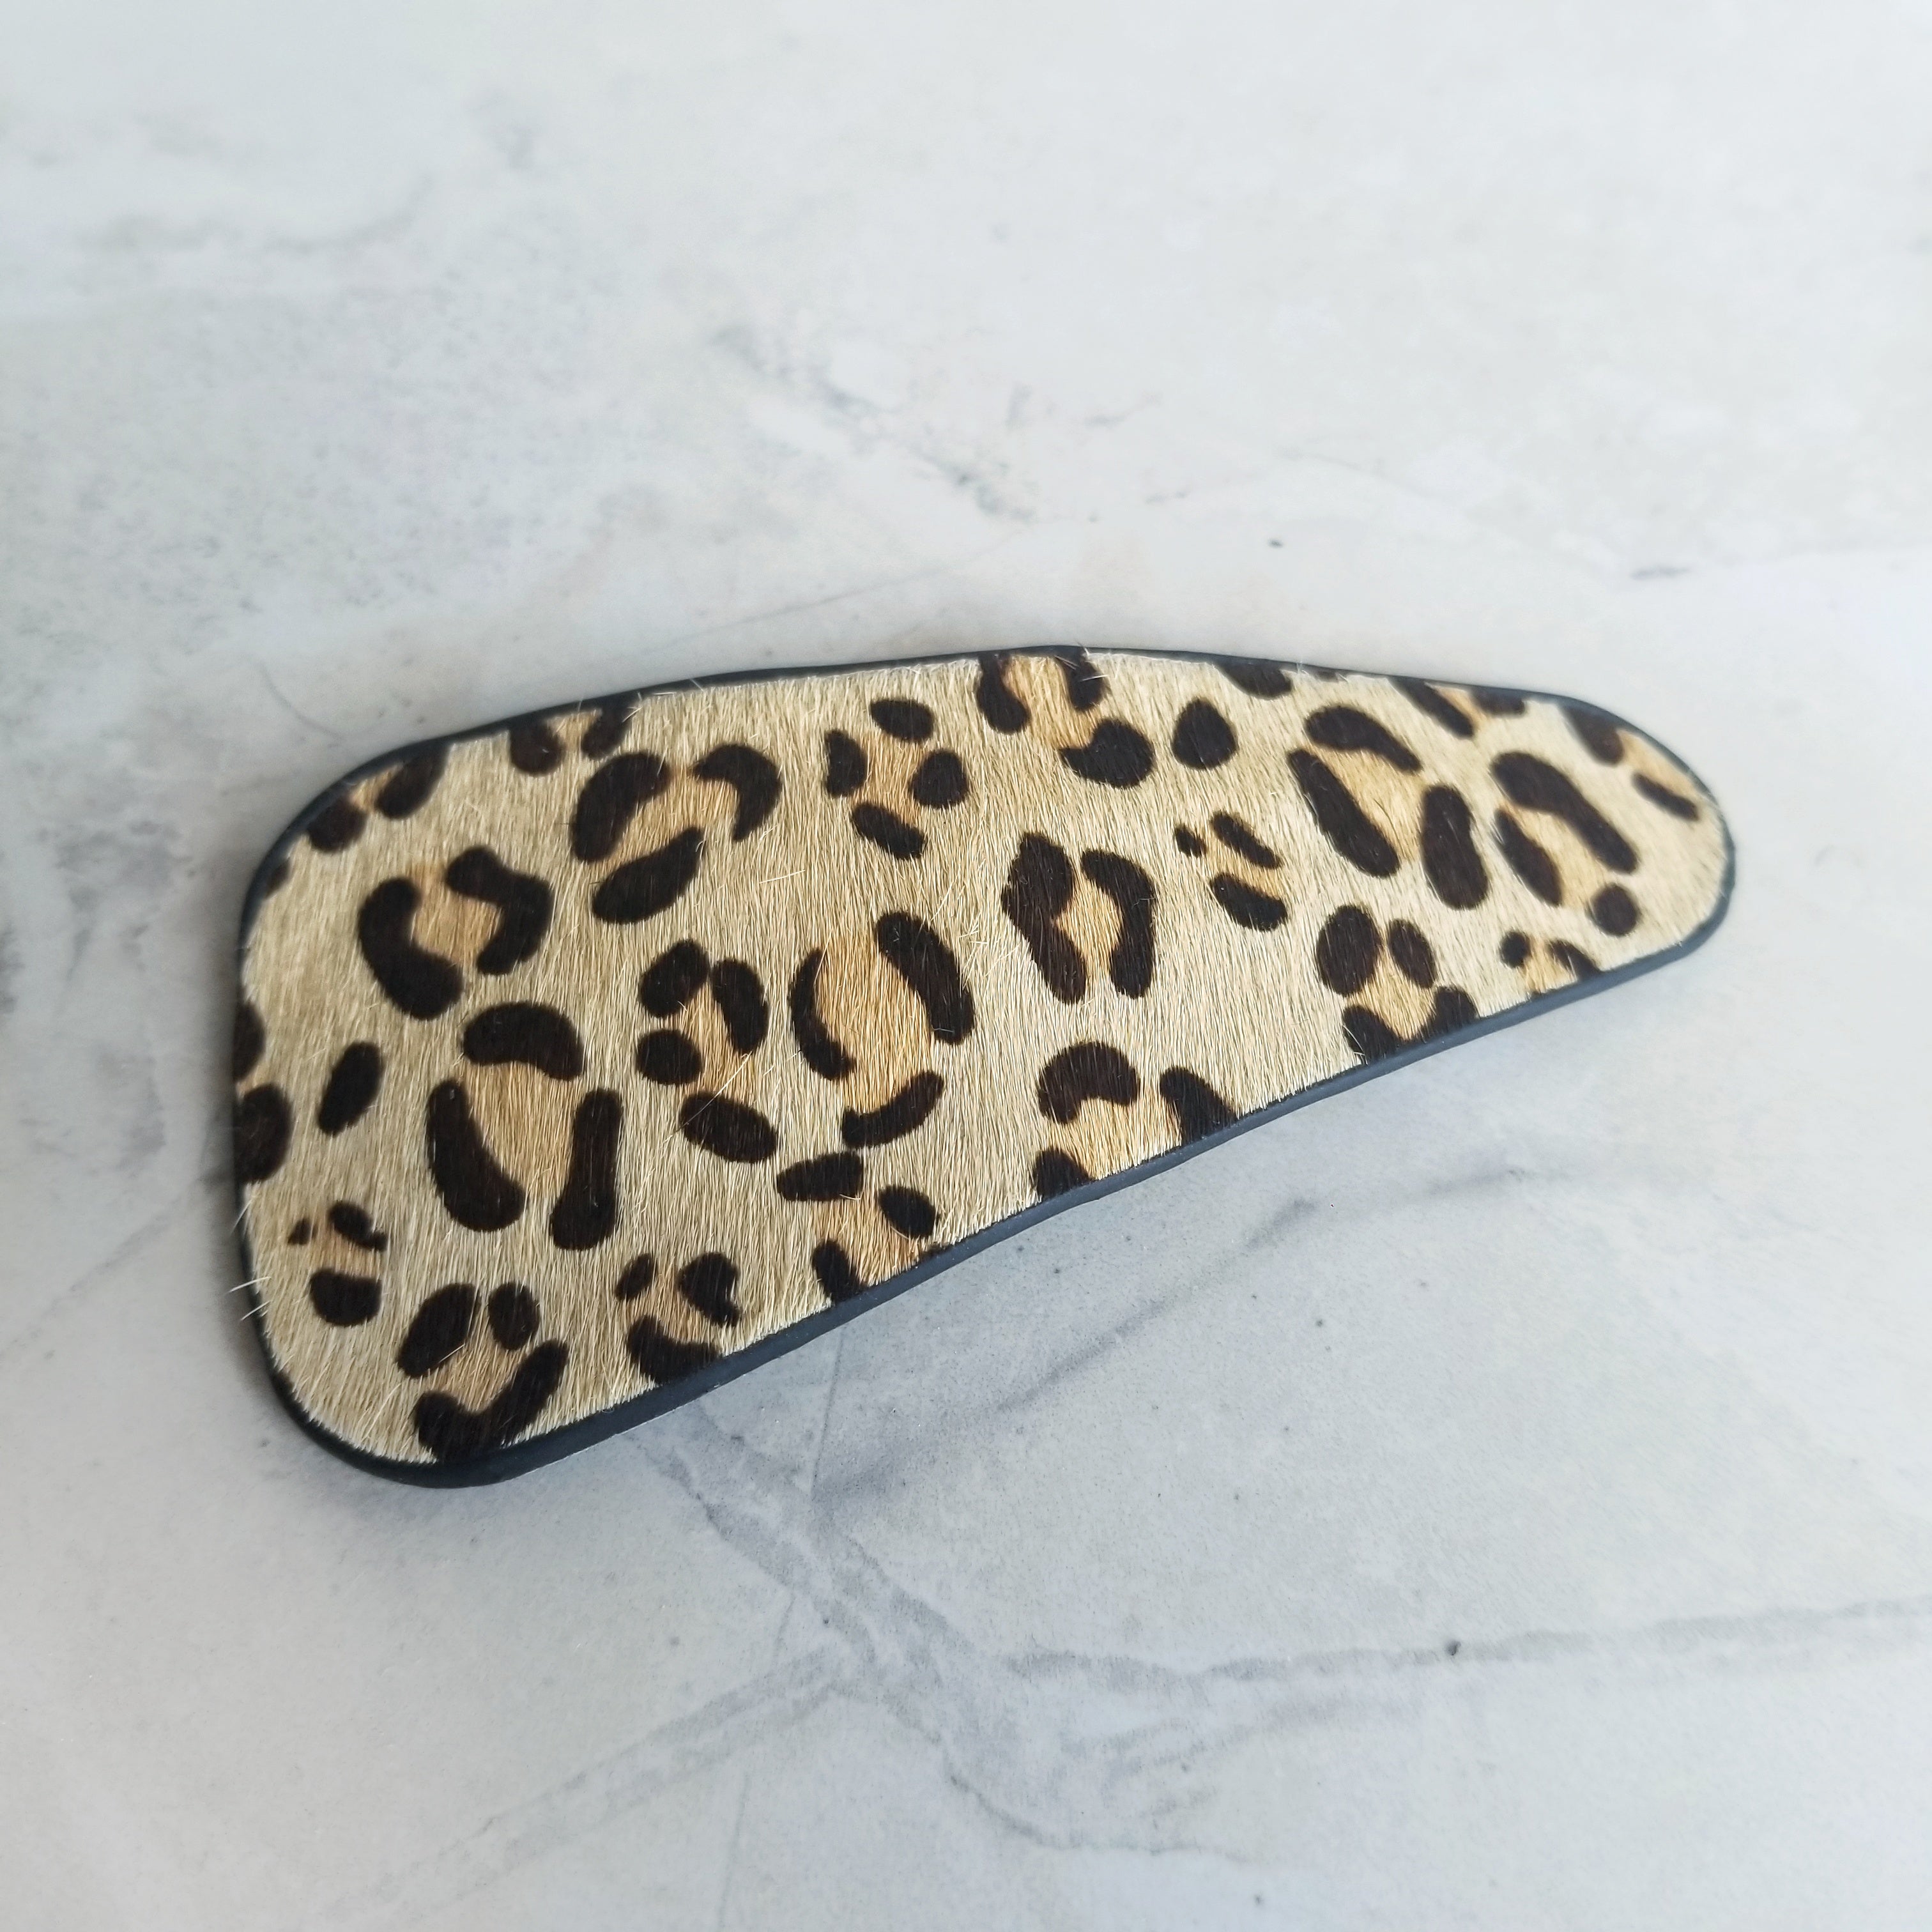 Leopard hairpin